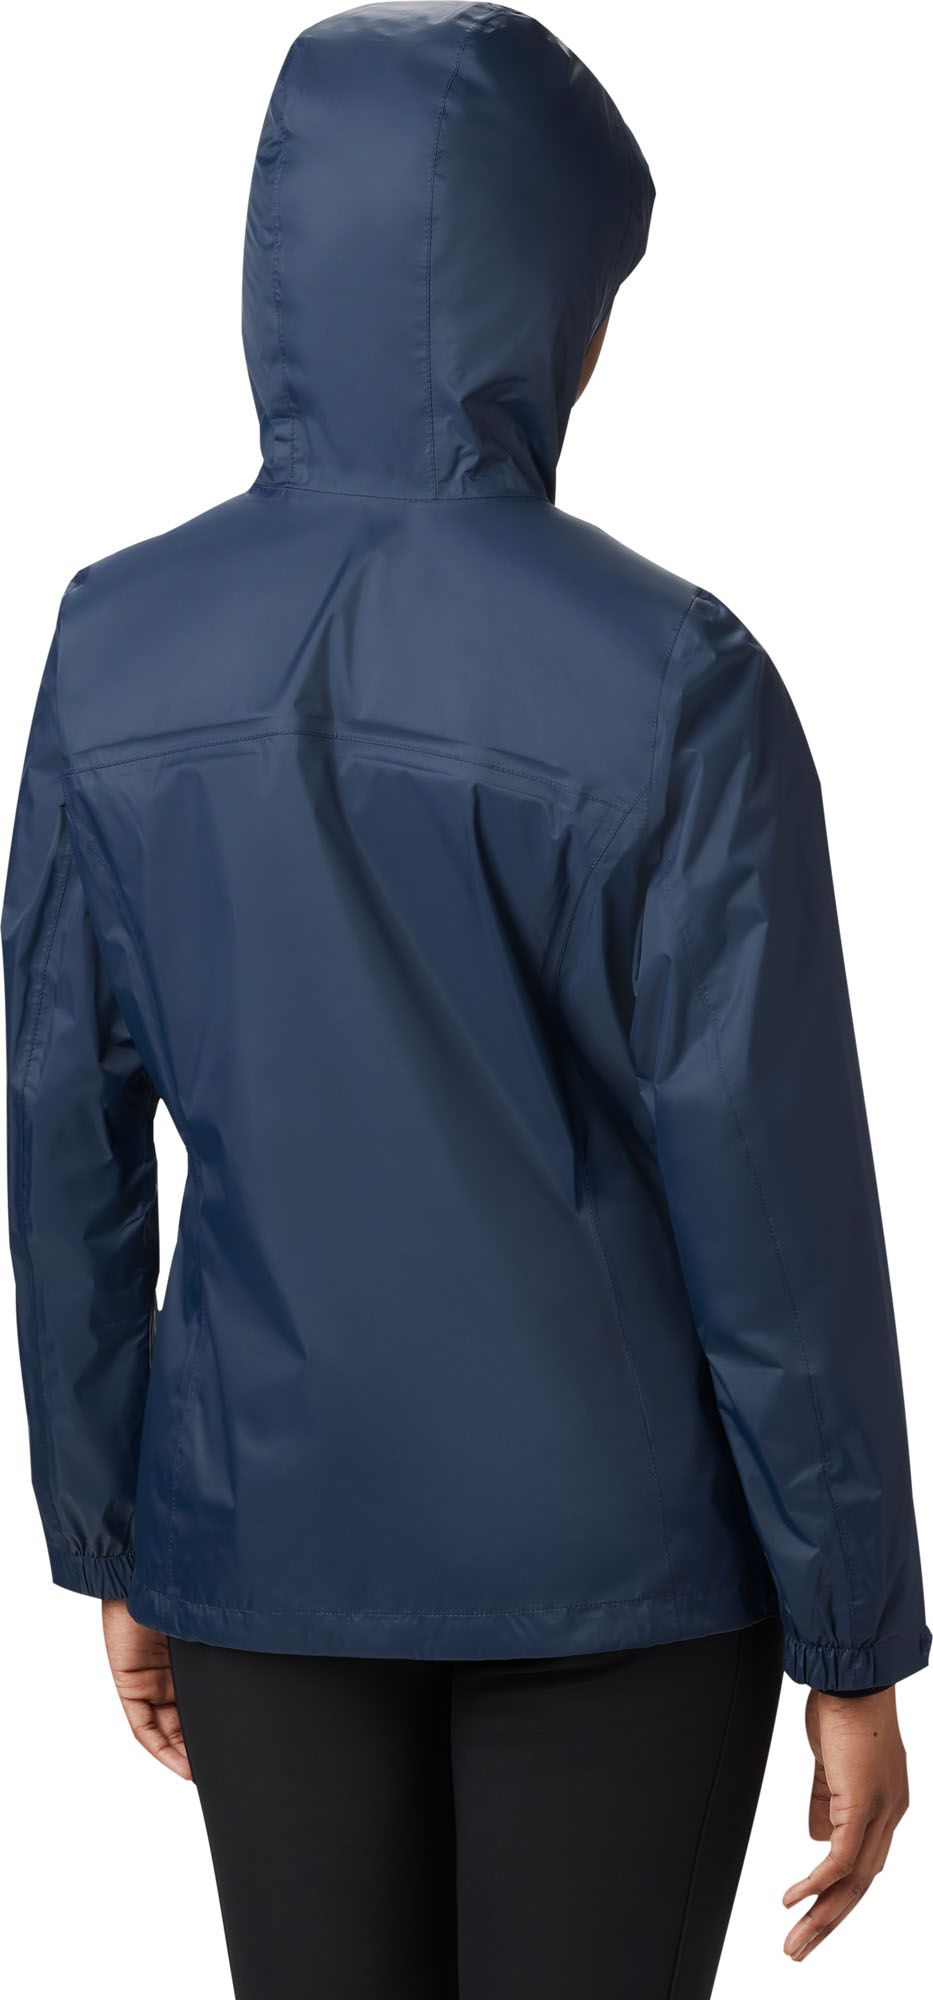 columbia breathable rain jacket